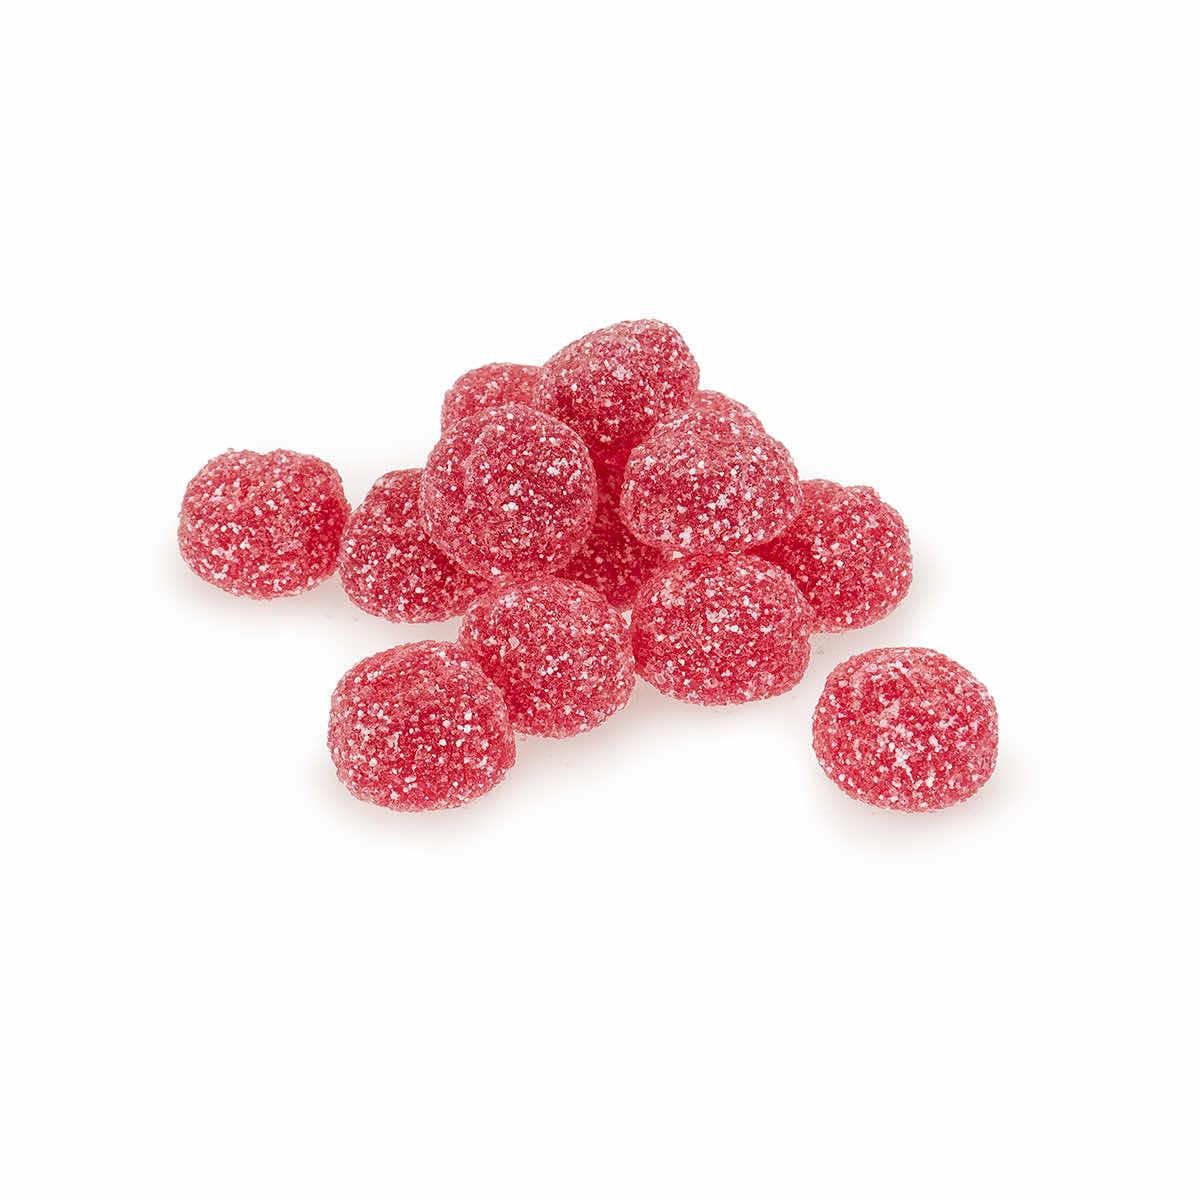  Sour Cherry Buttons Candy - 1 Lb.